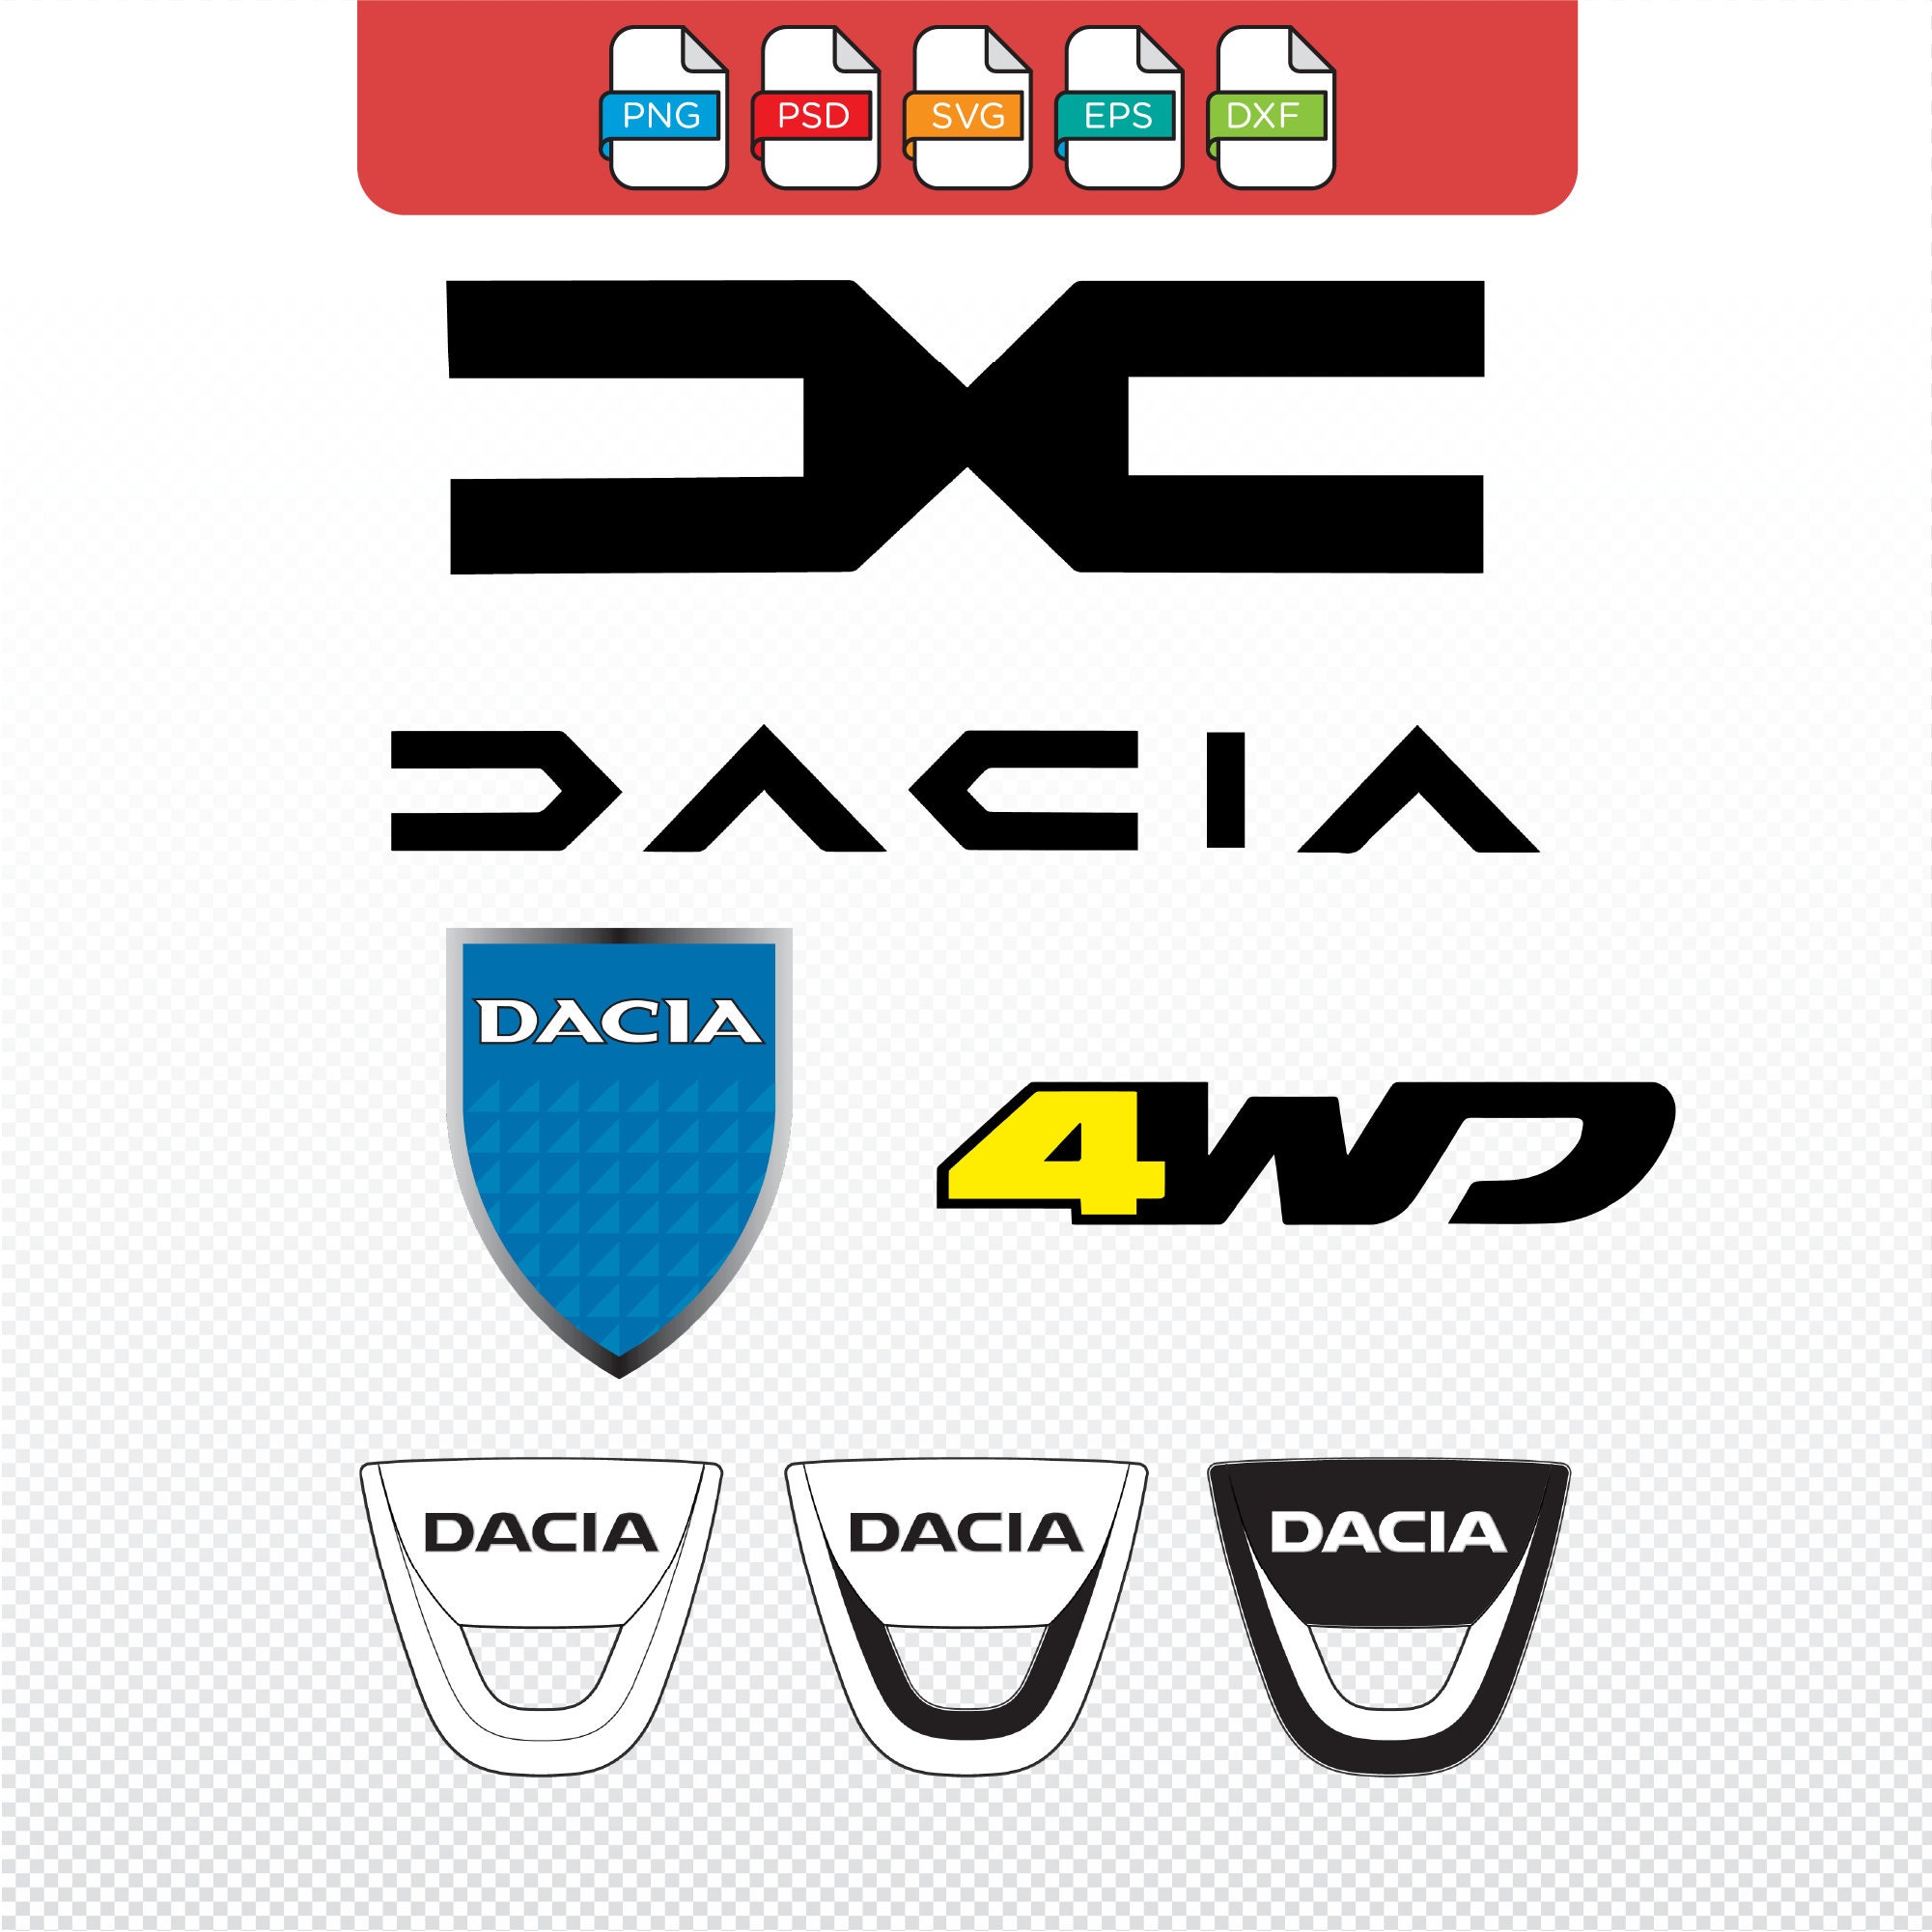 Dacia Neues Logo Schlüsselgehäuse Cover